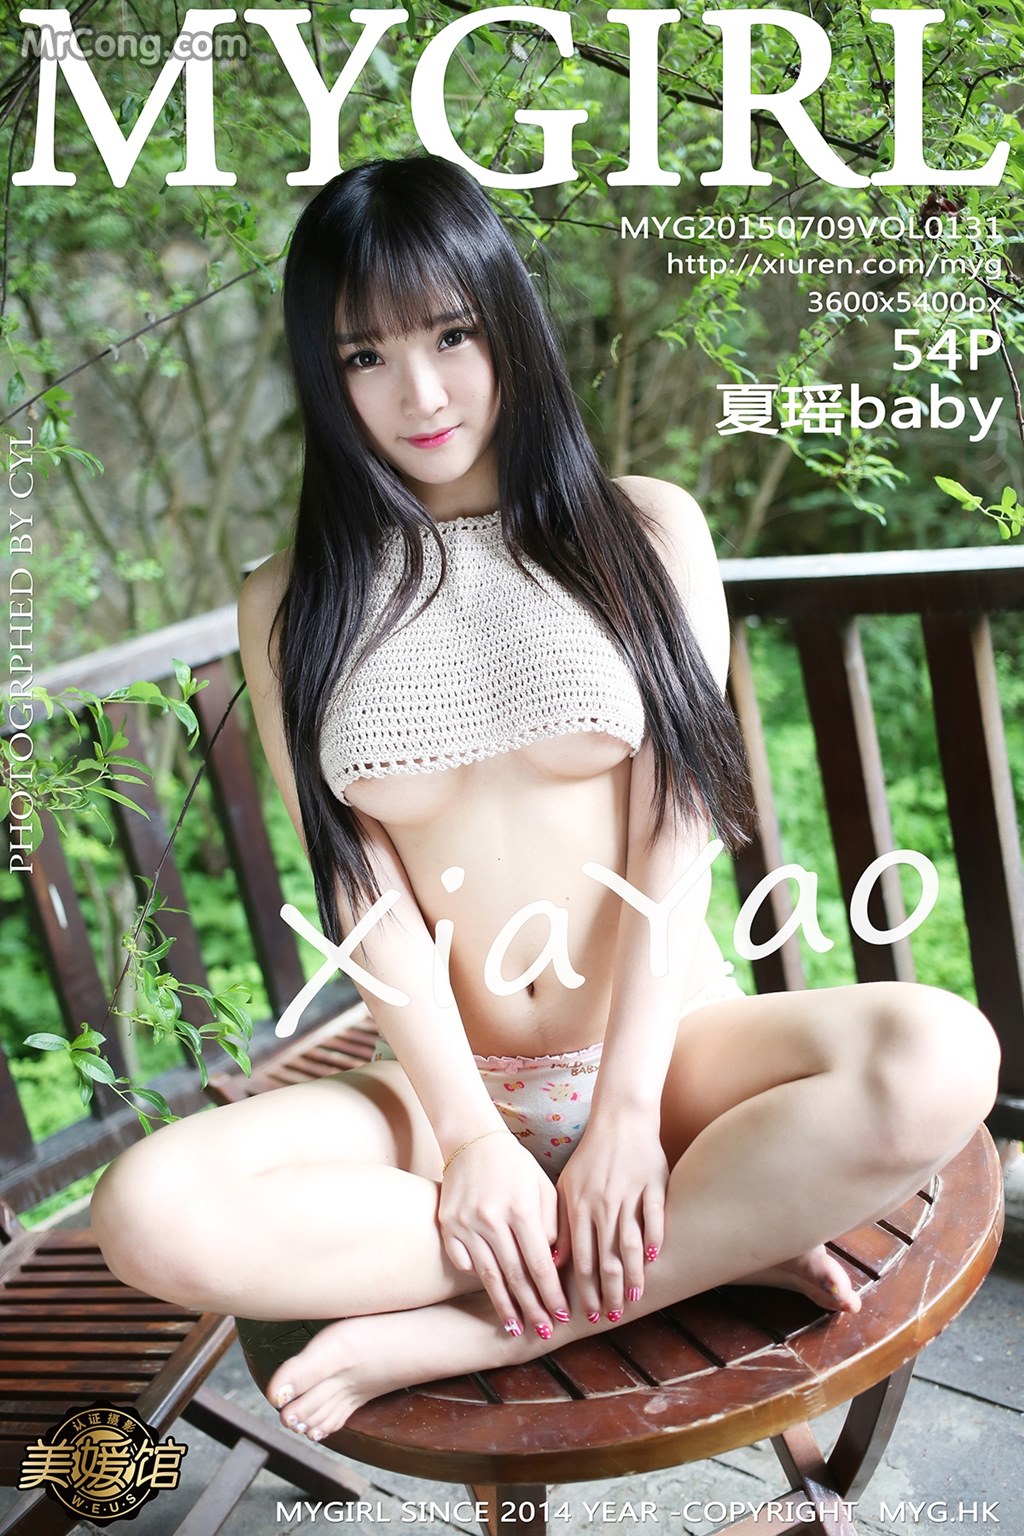 MyGirl Vol.131: Model Xia Yao baby (夏 瑶 baby) (55 photos) photo 1-0